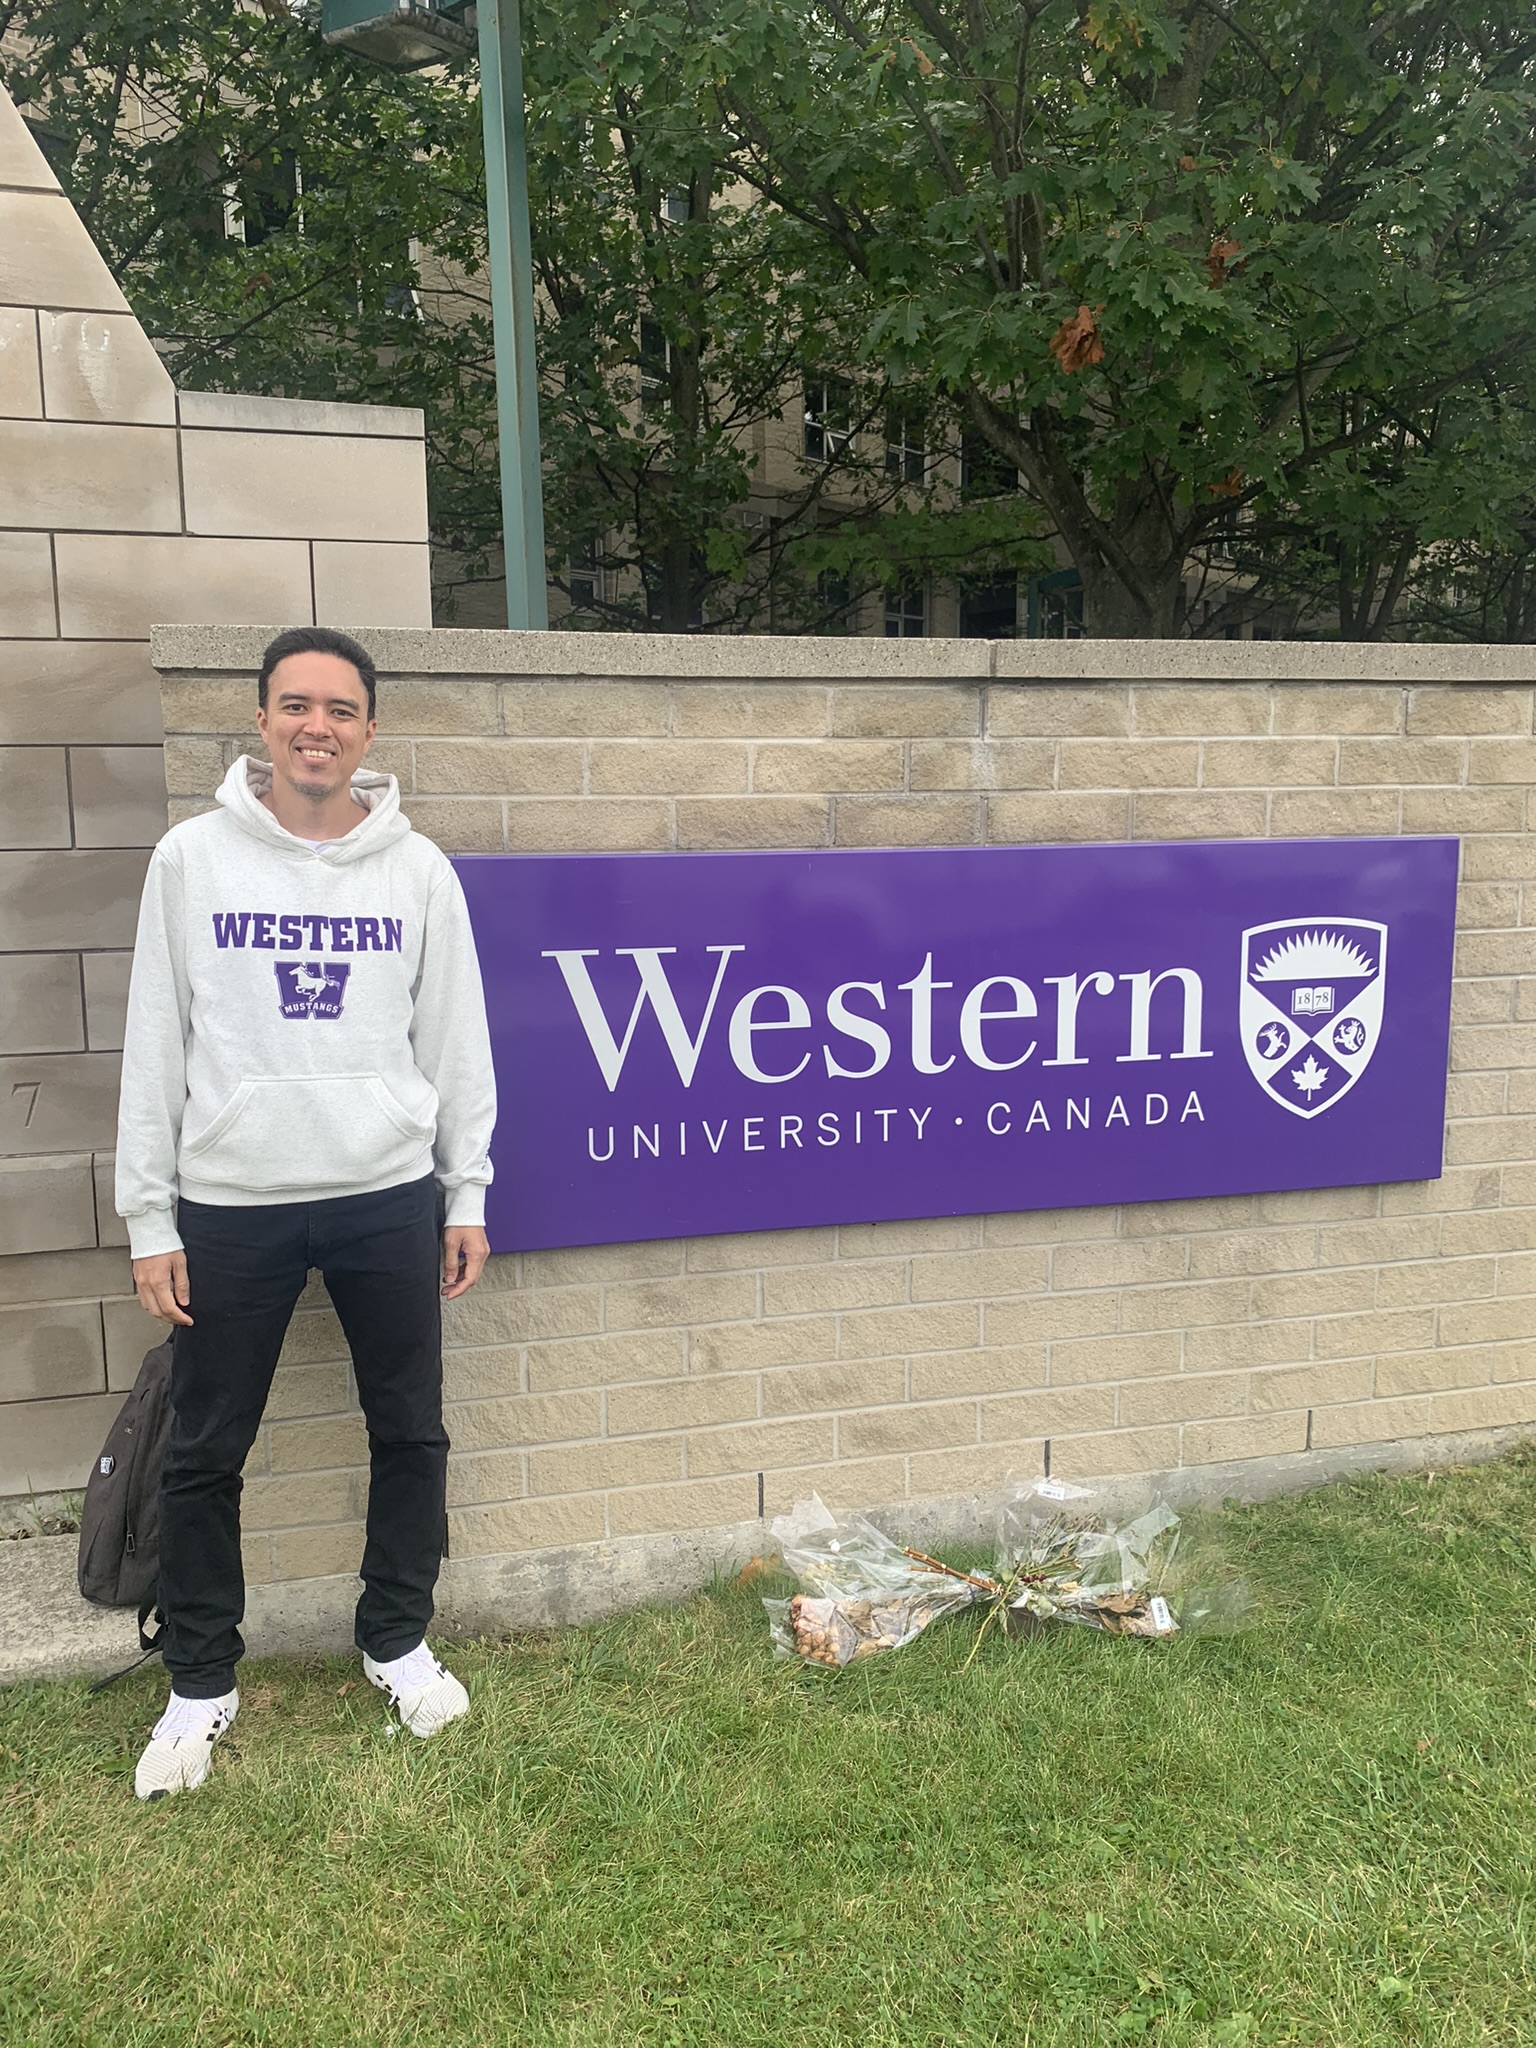 From MSU to Western University